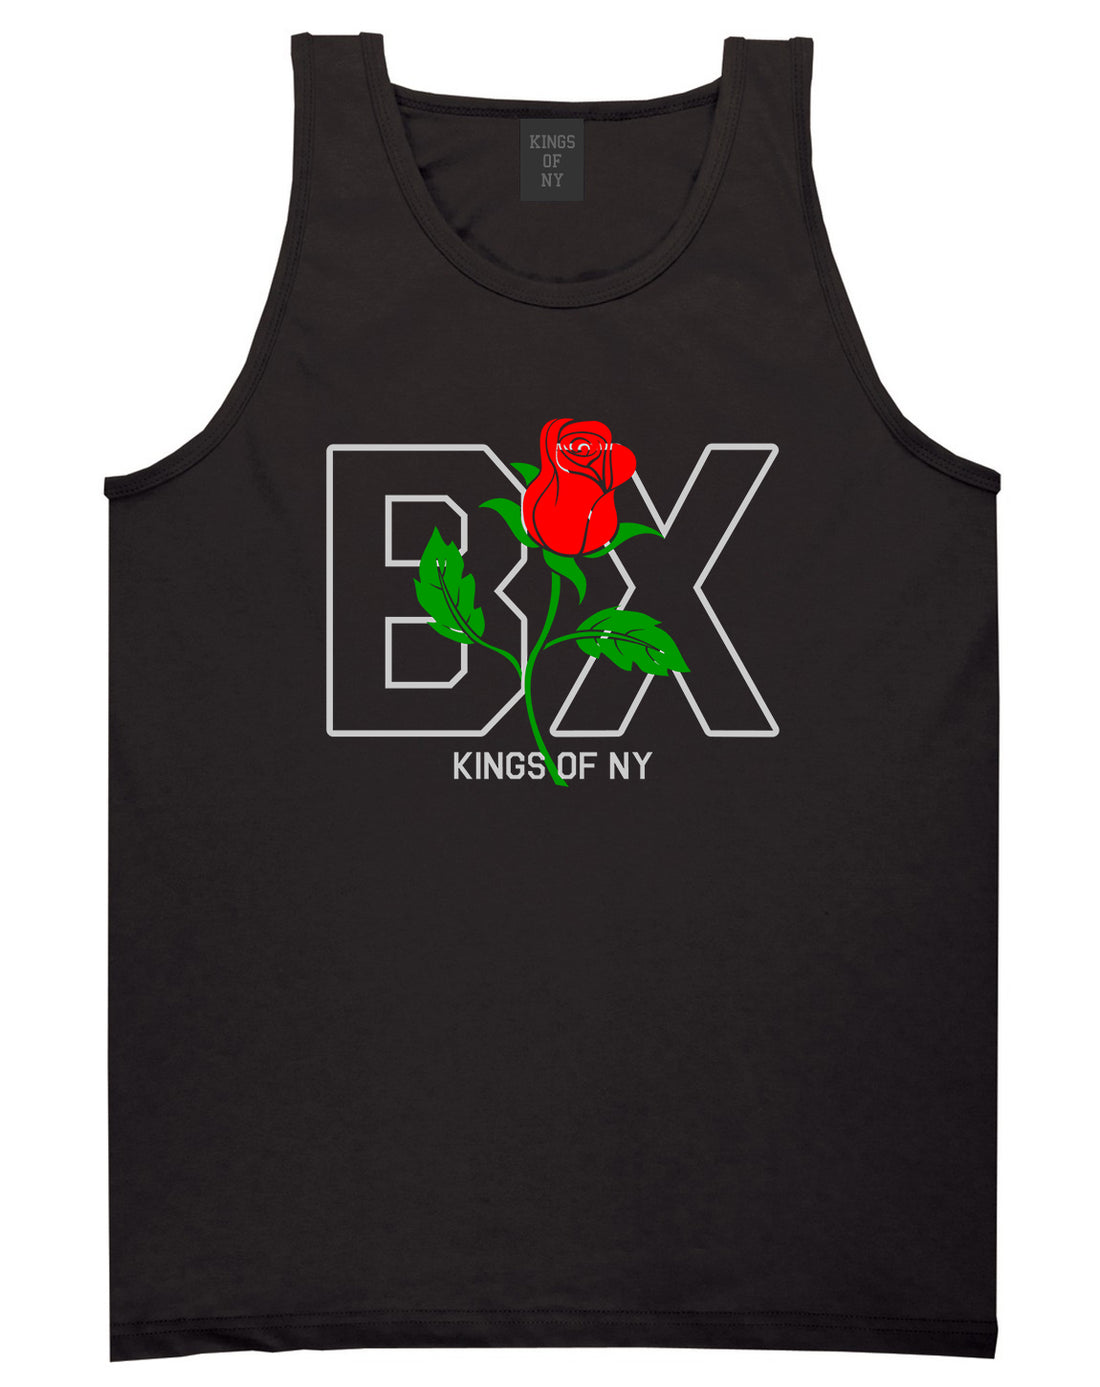 Rose BX The Bronx Kings Of NY Mens Tank Top T-Shirt Black